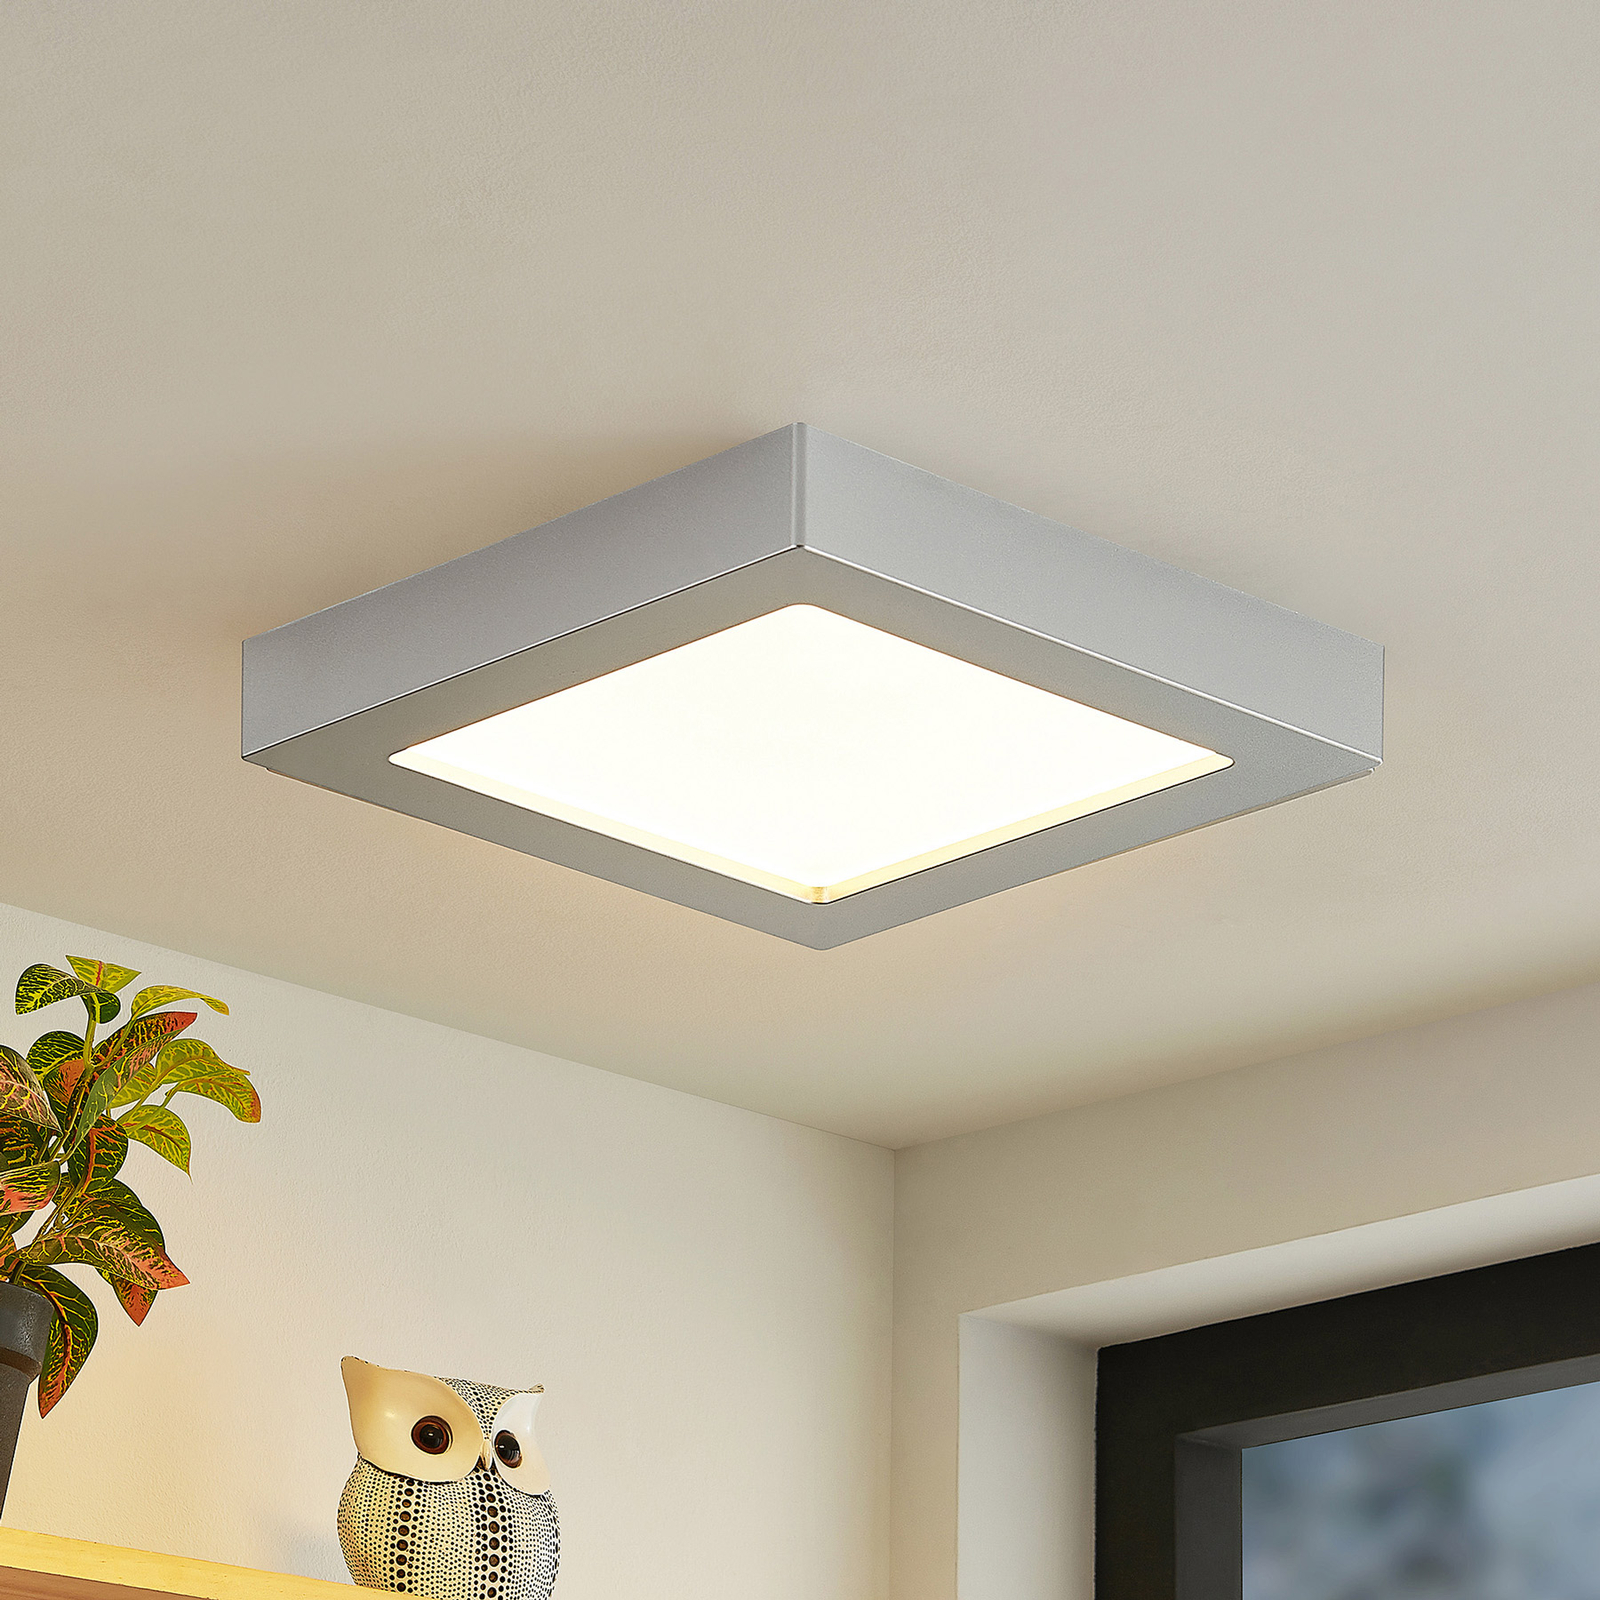 Prios Alette LED ceiling light silver 22.7 cm 24 W